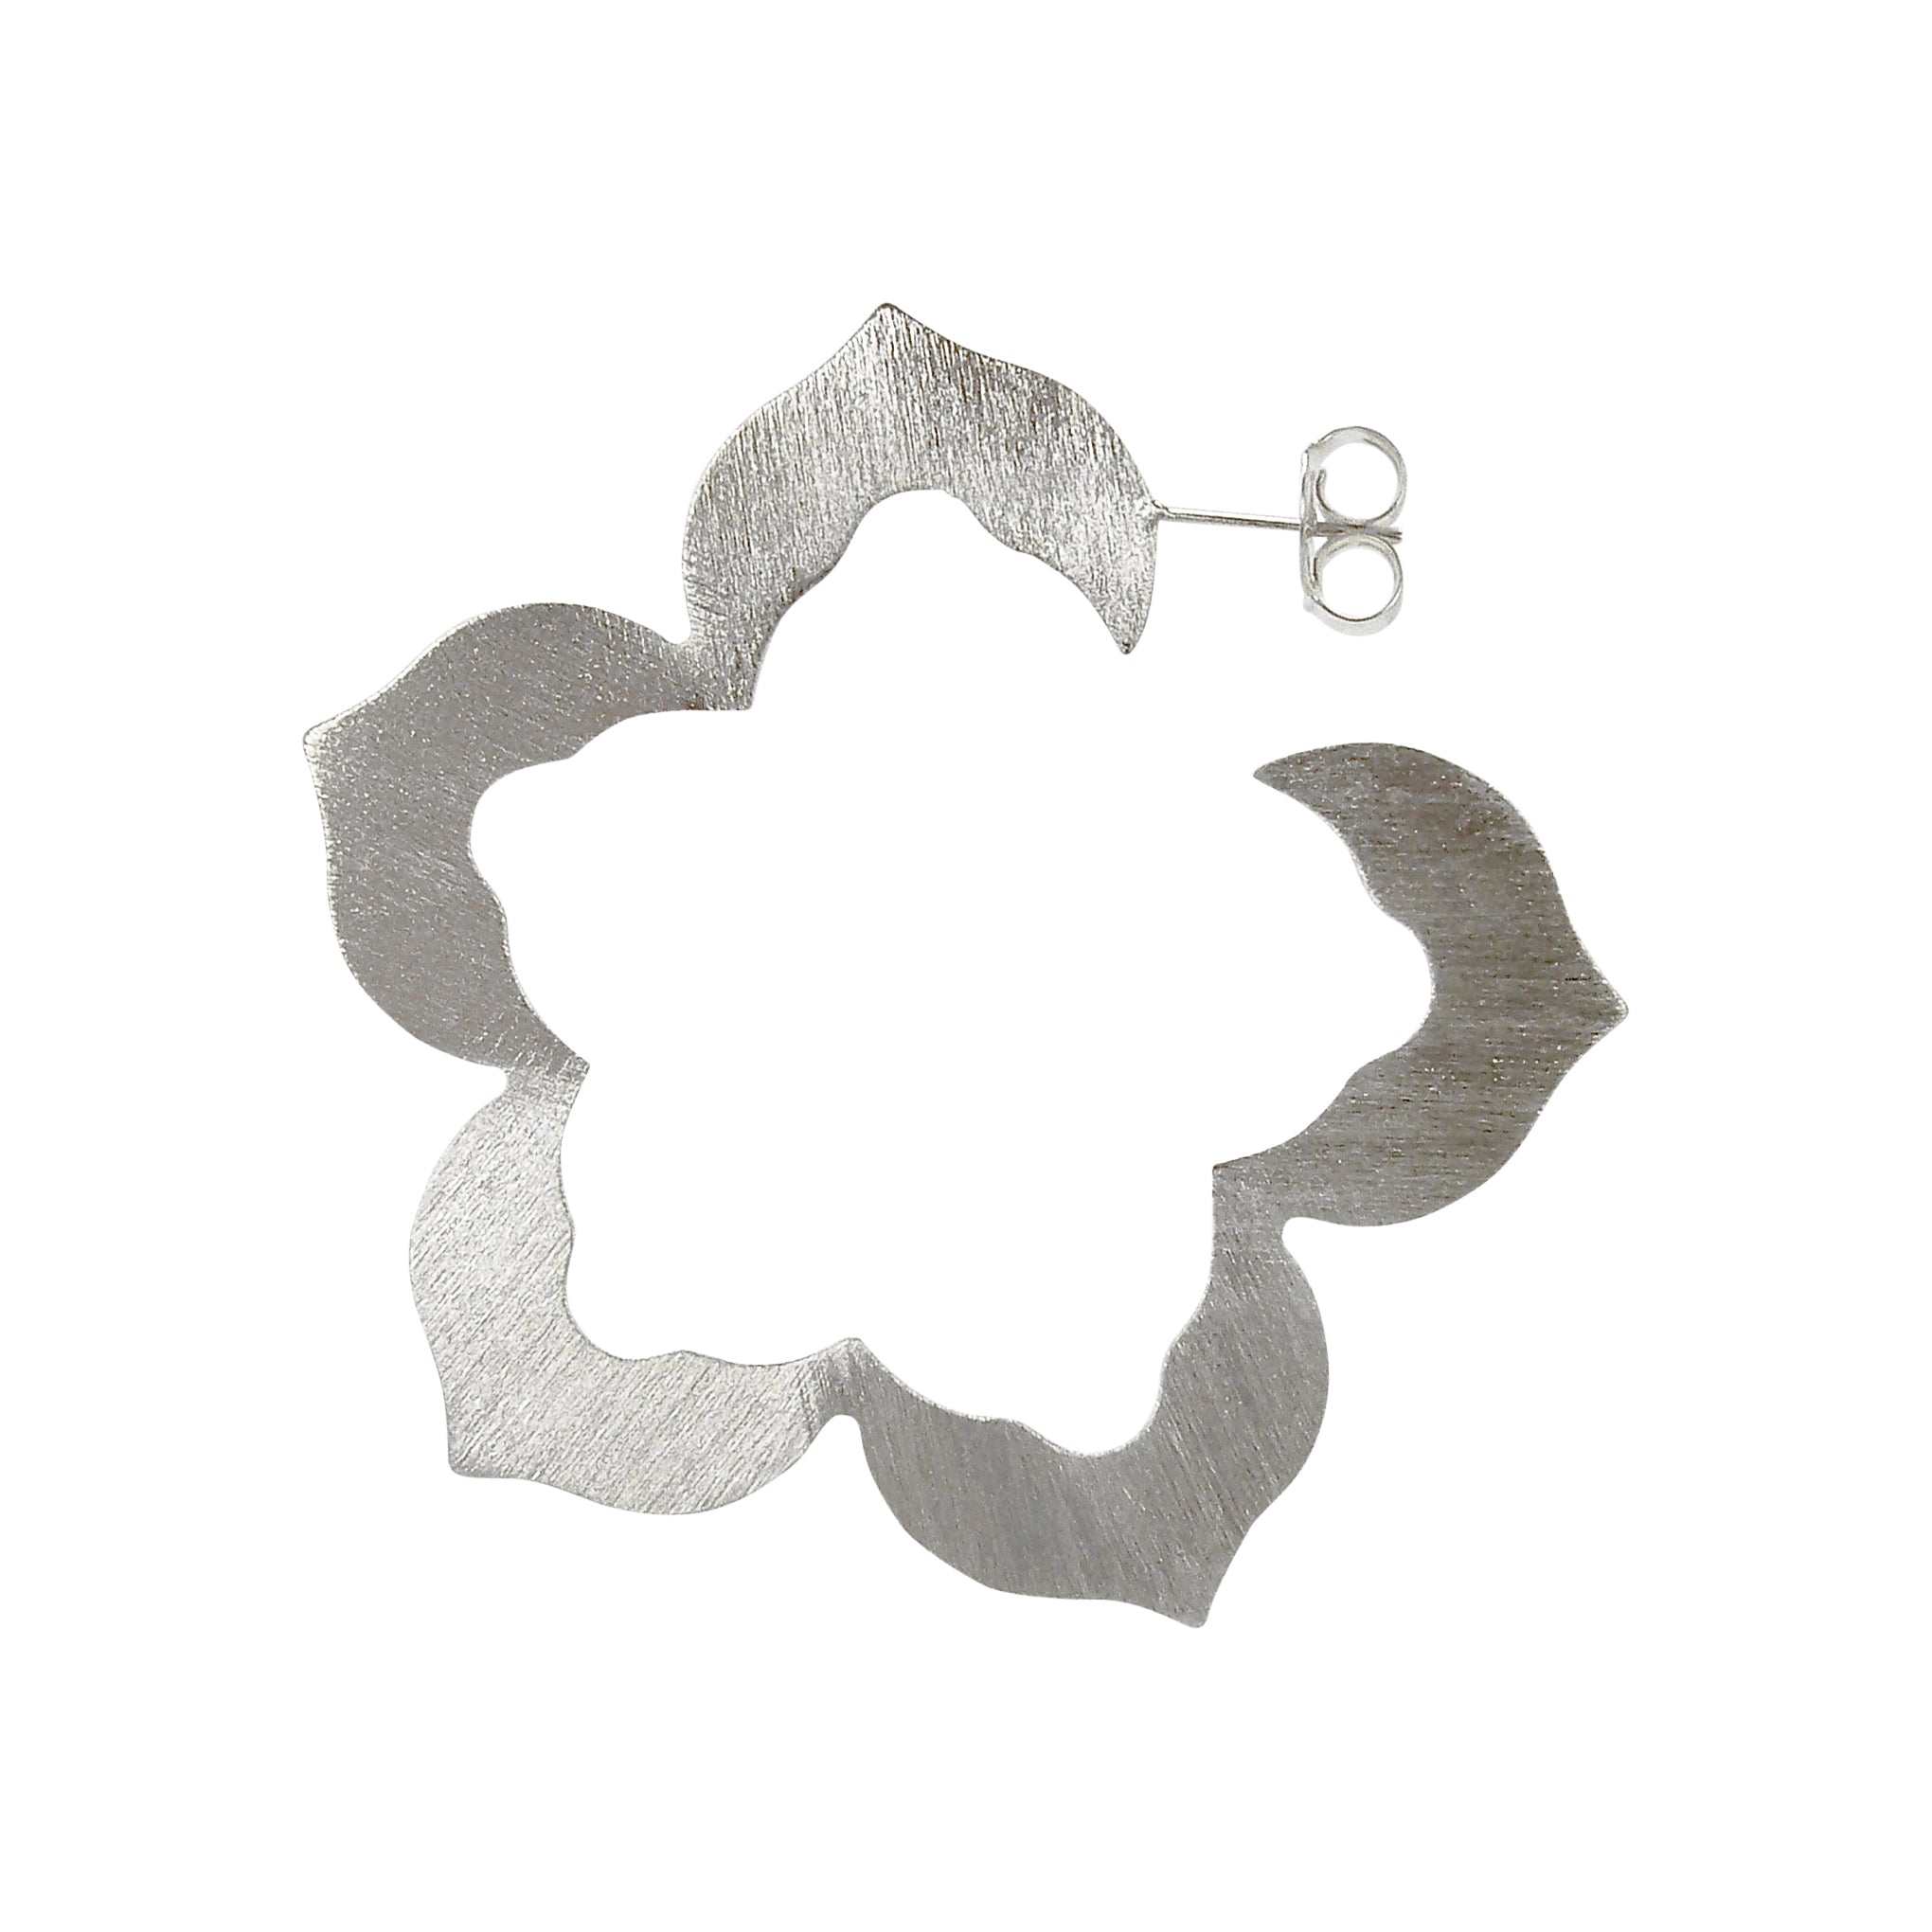 single side image of Sheila Fajl Flora Flower Inspired Hoop Earrings in Brushed Silver Plated